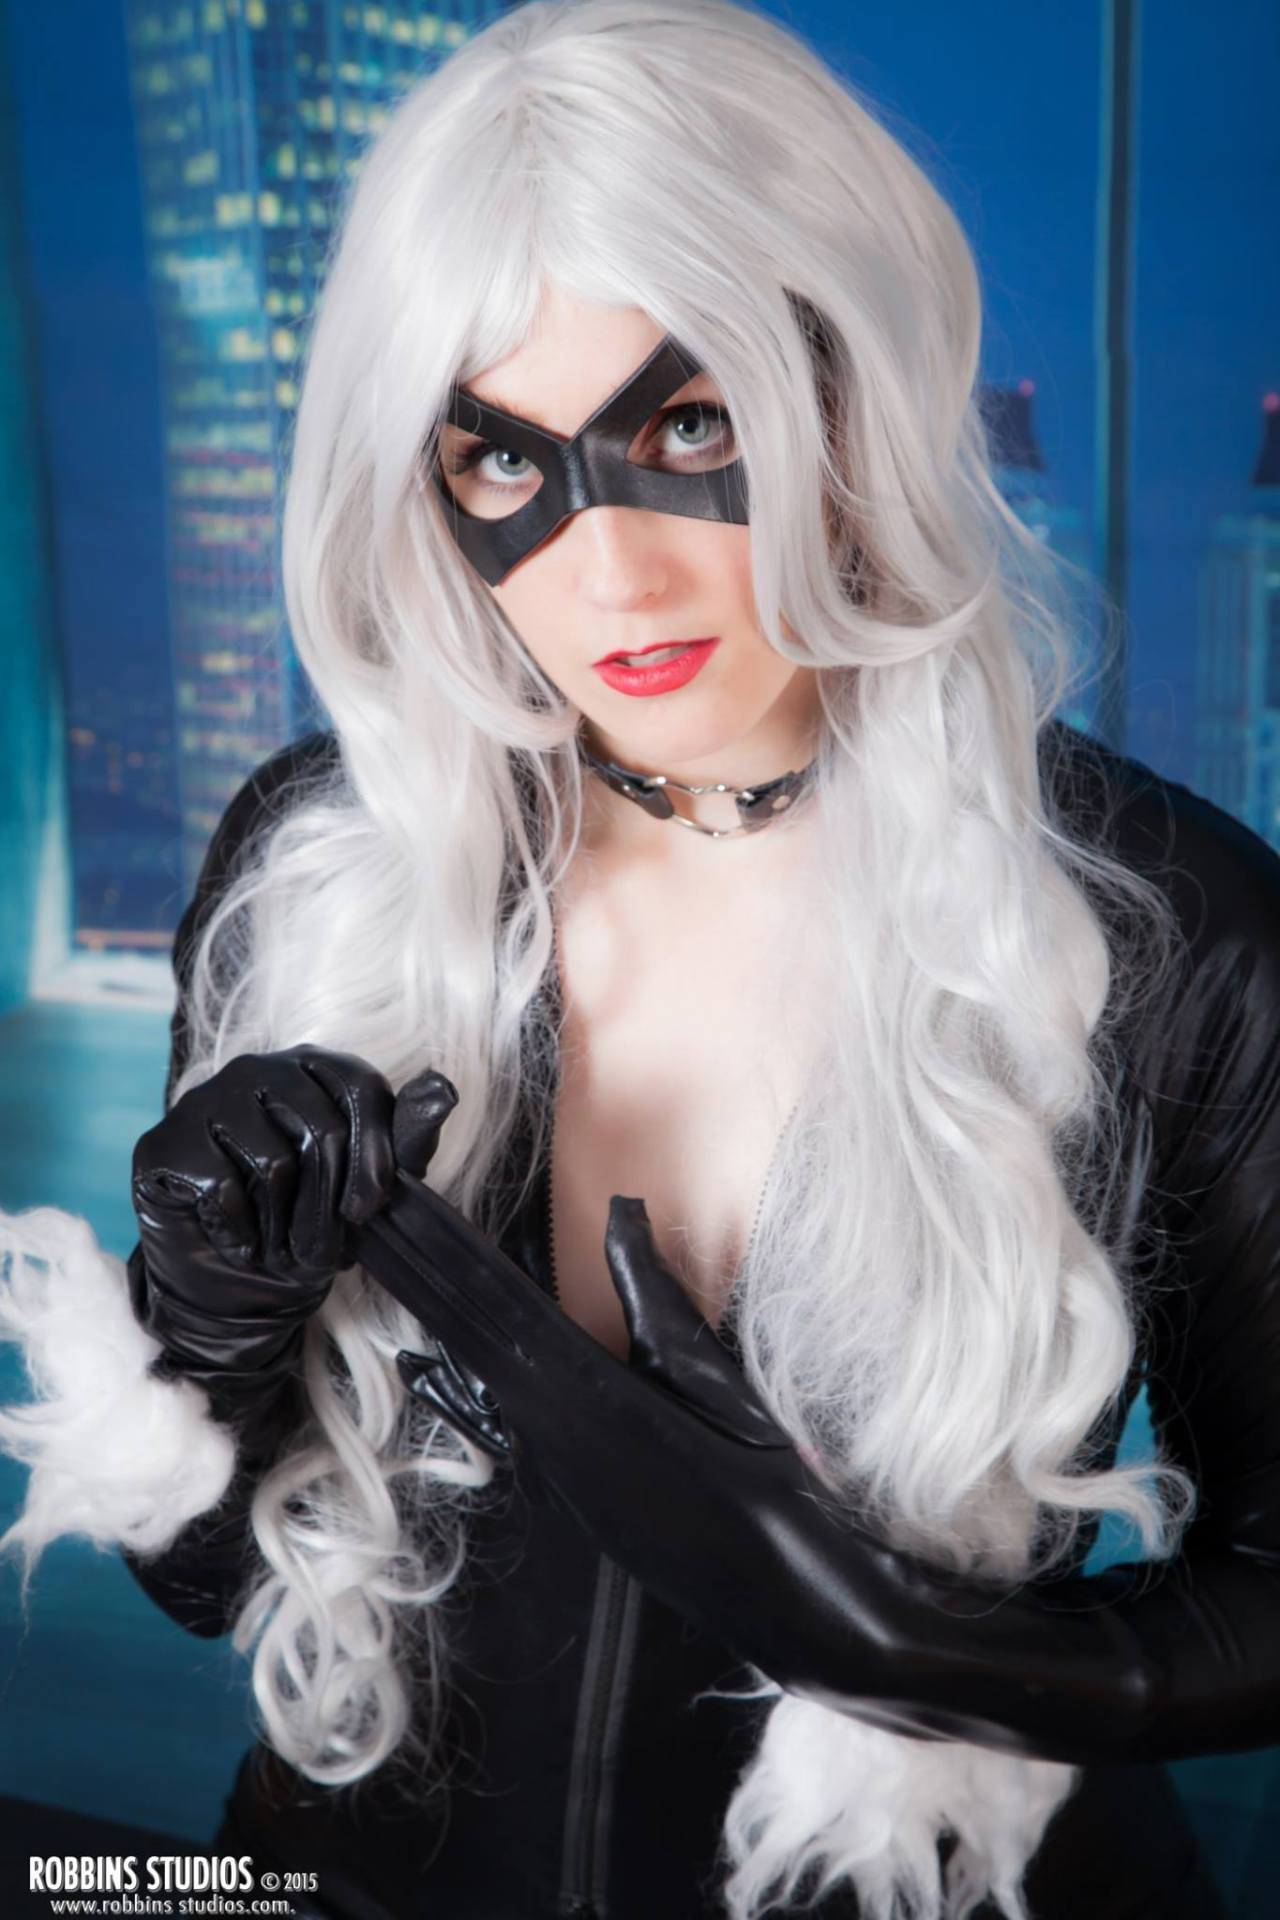 My Black Cat cosplay :3 photos thanks to Robbins Studios